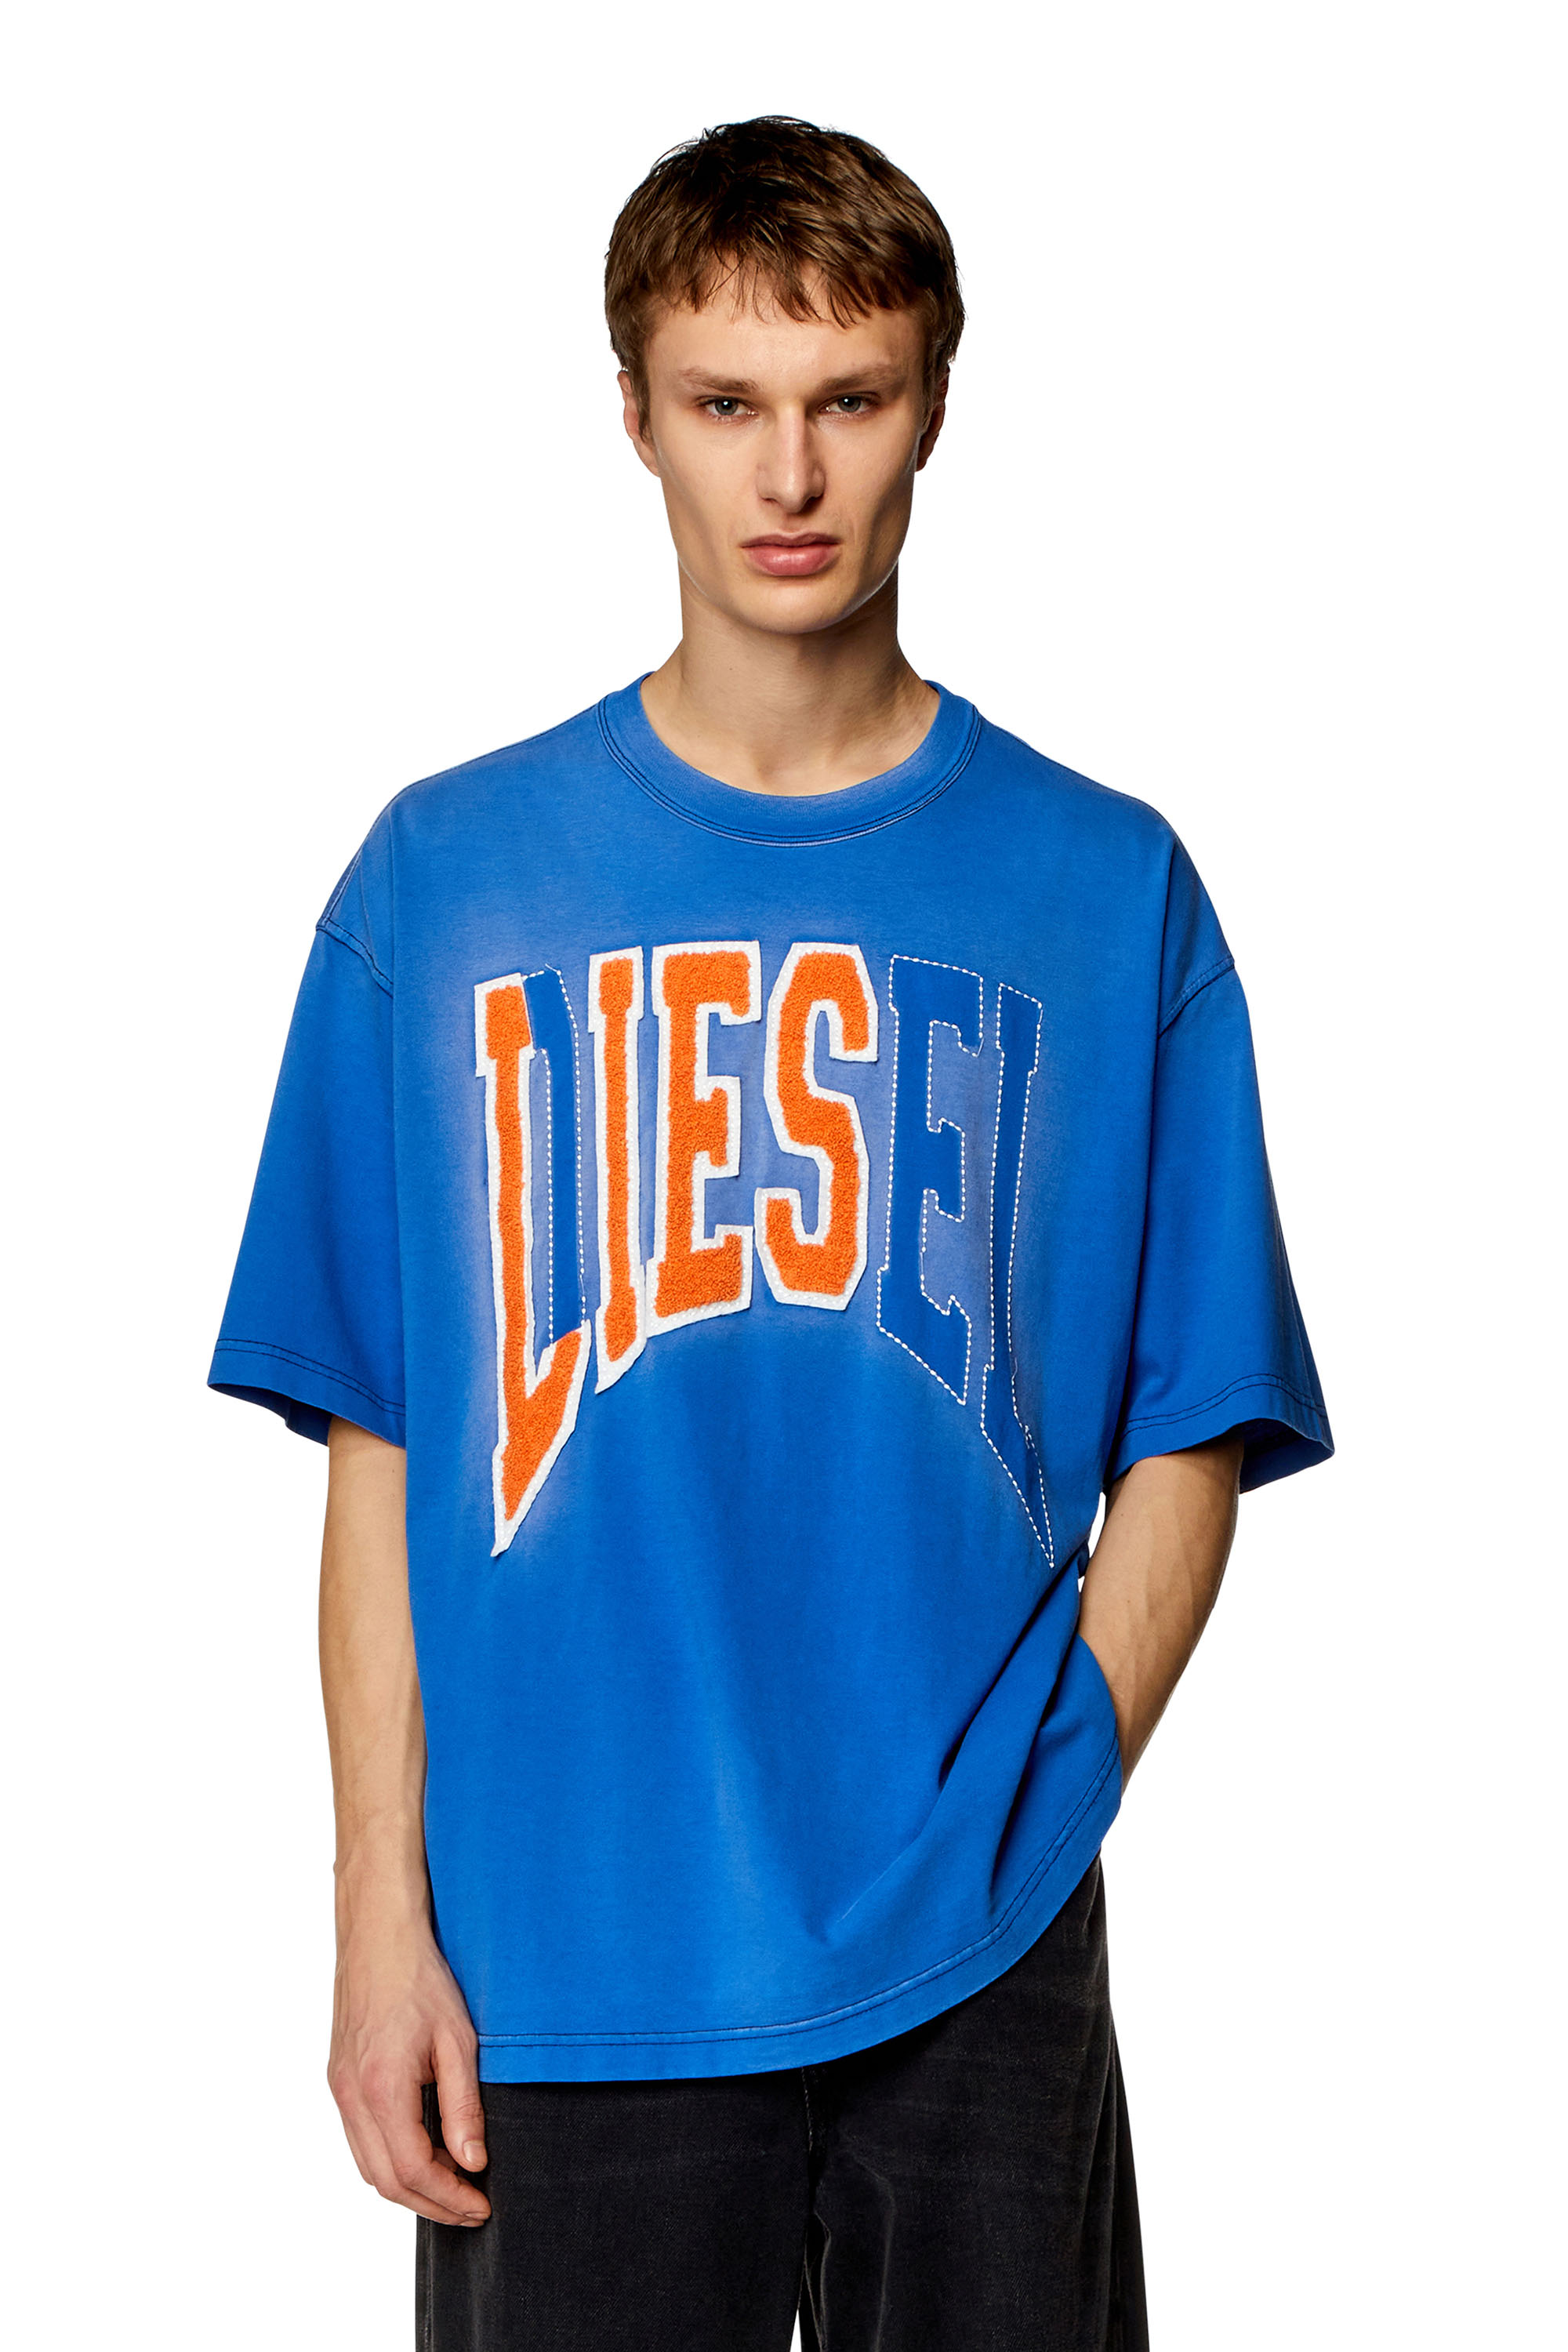 Diesel - T-WASH-N, Homme T-shirt oversize avec logo Diesel Lies in Bleu - Image 1